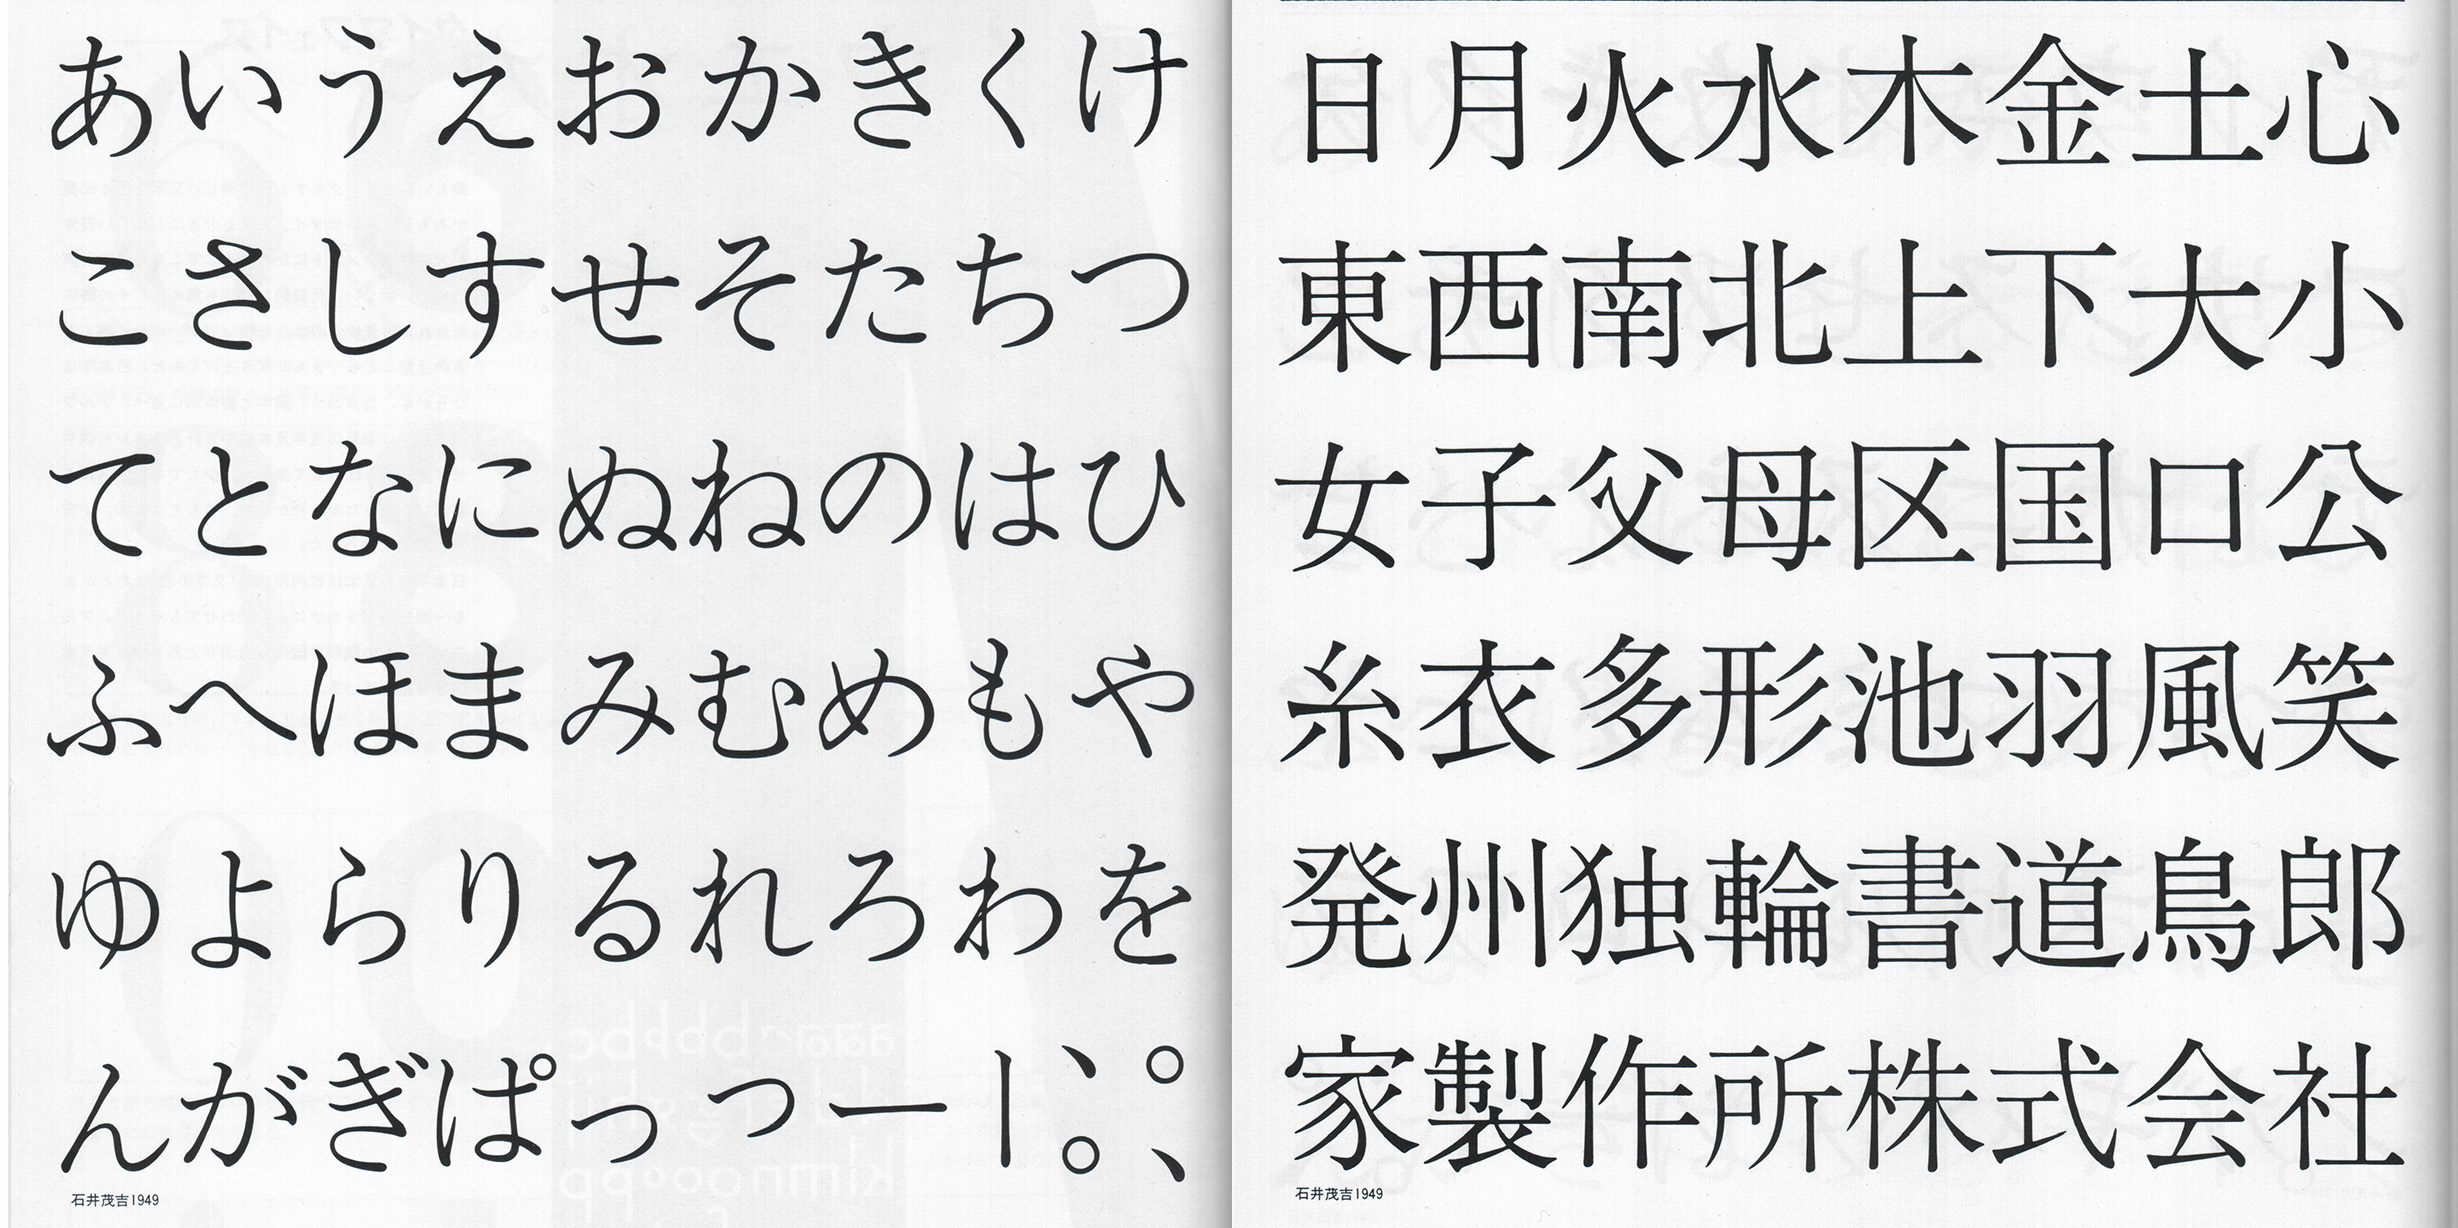 Ishii Hoso Mincho Font by Shaken. Kuwayama, Yasaburo: Lettering and Design, Tokyo 1997, p. 60, 62 